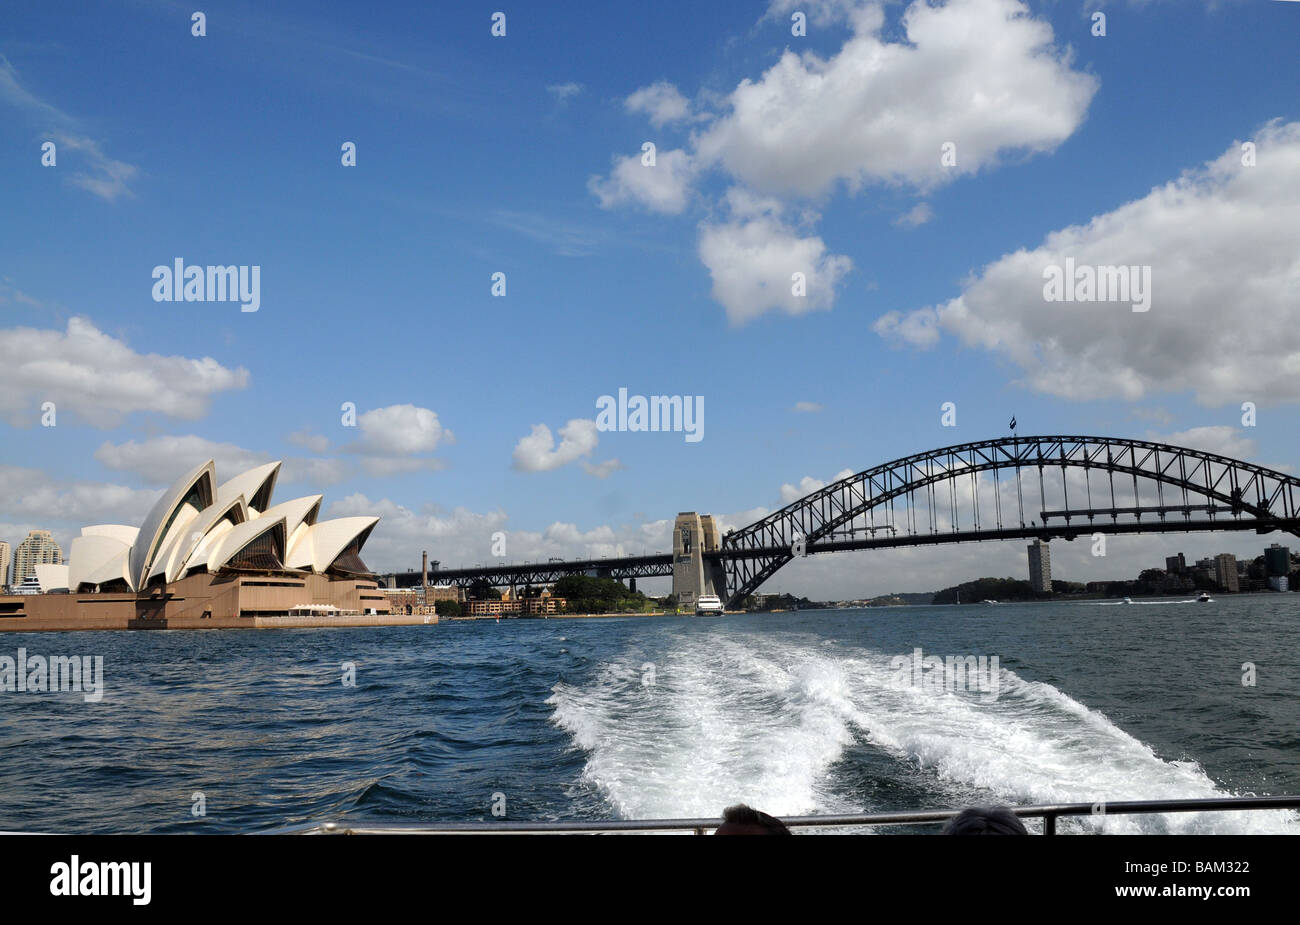 Sydney Australia, View of Sydney Bridge and Opera House.Icons of Australia, the bridge opened in 1932, The Opera House in 2003. Stock Photo